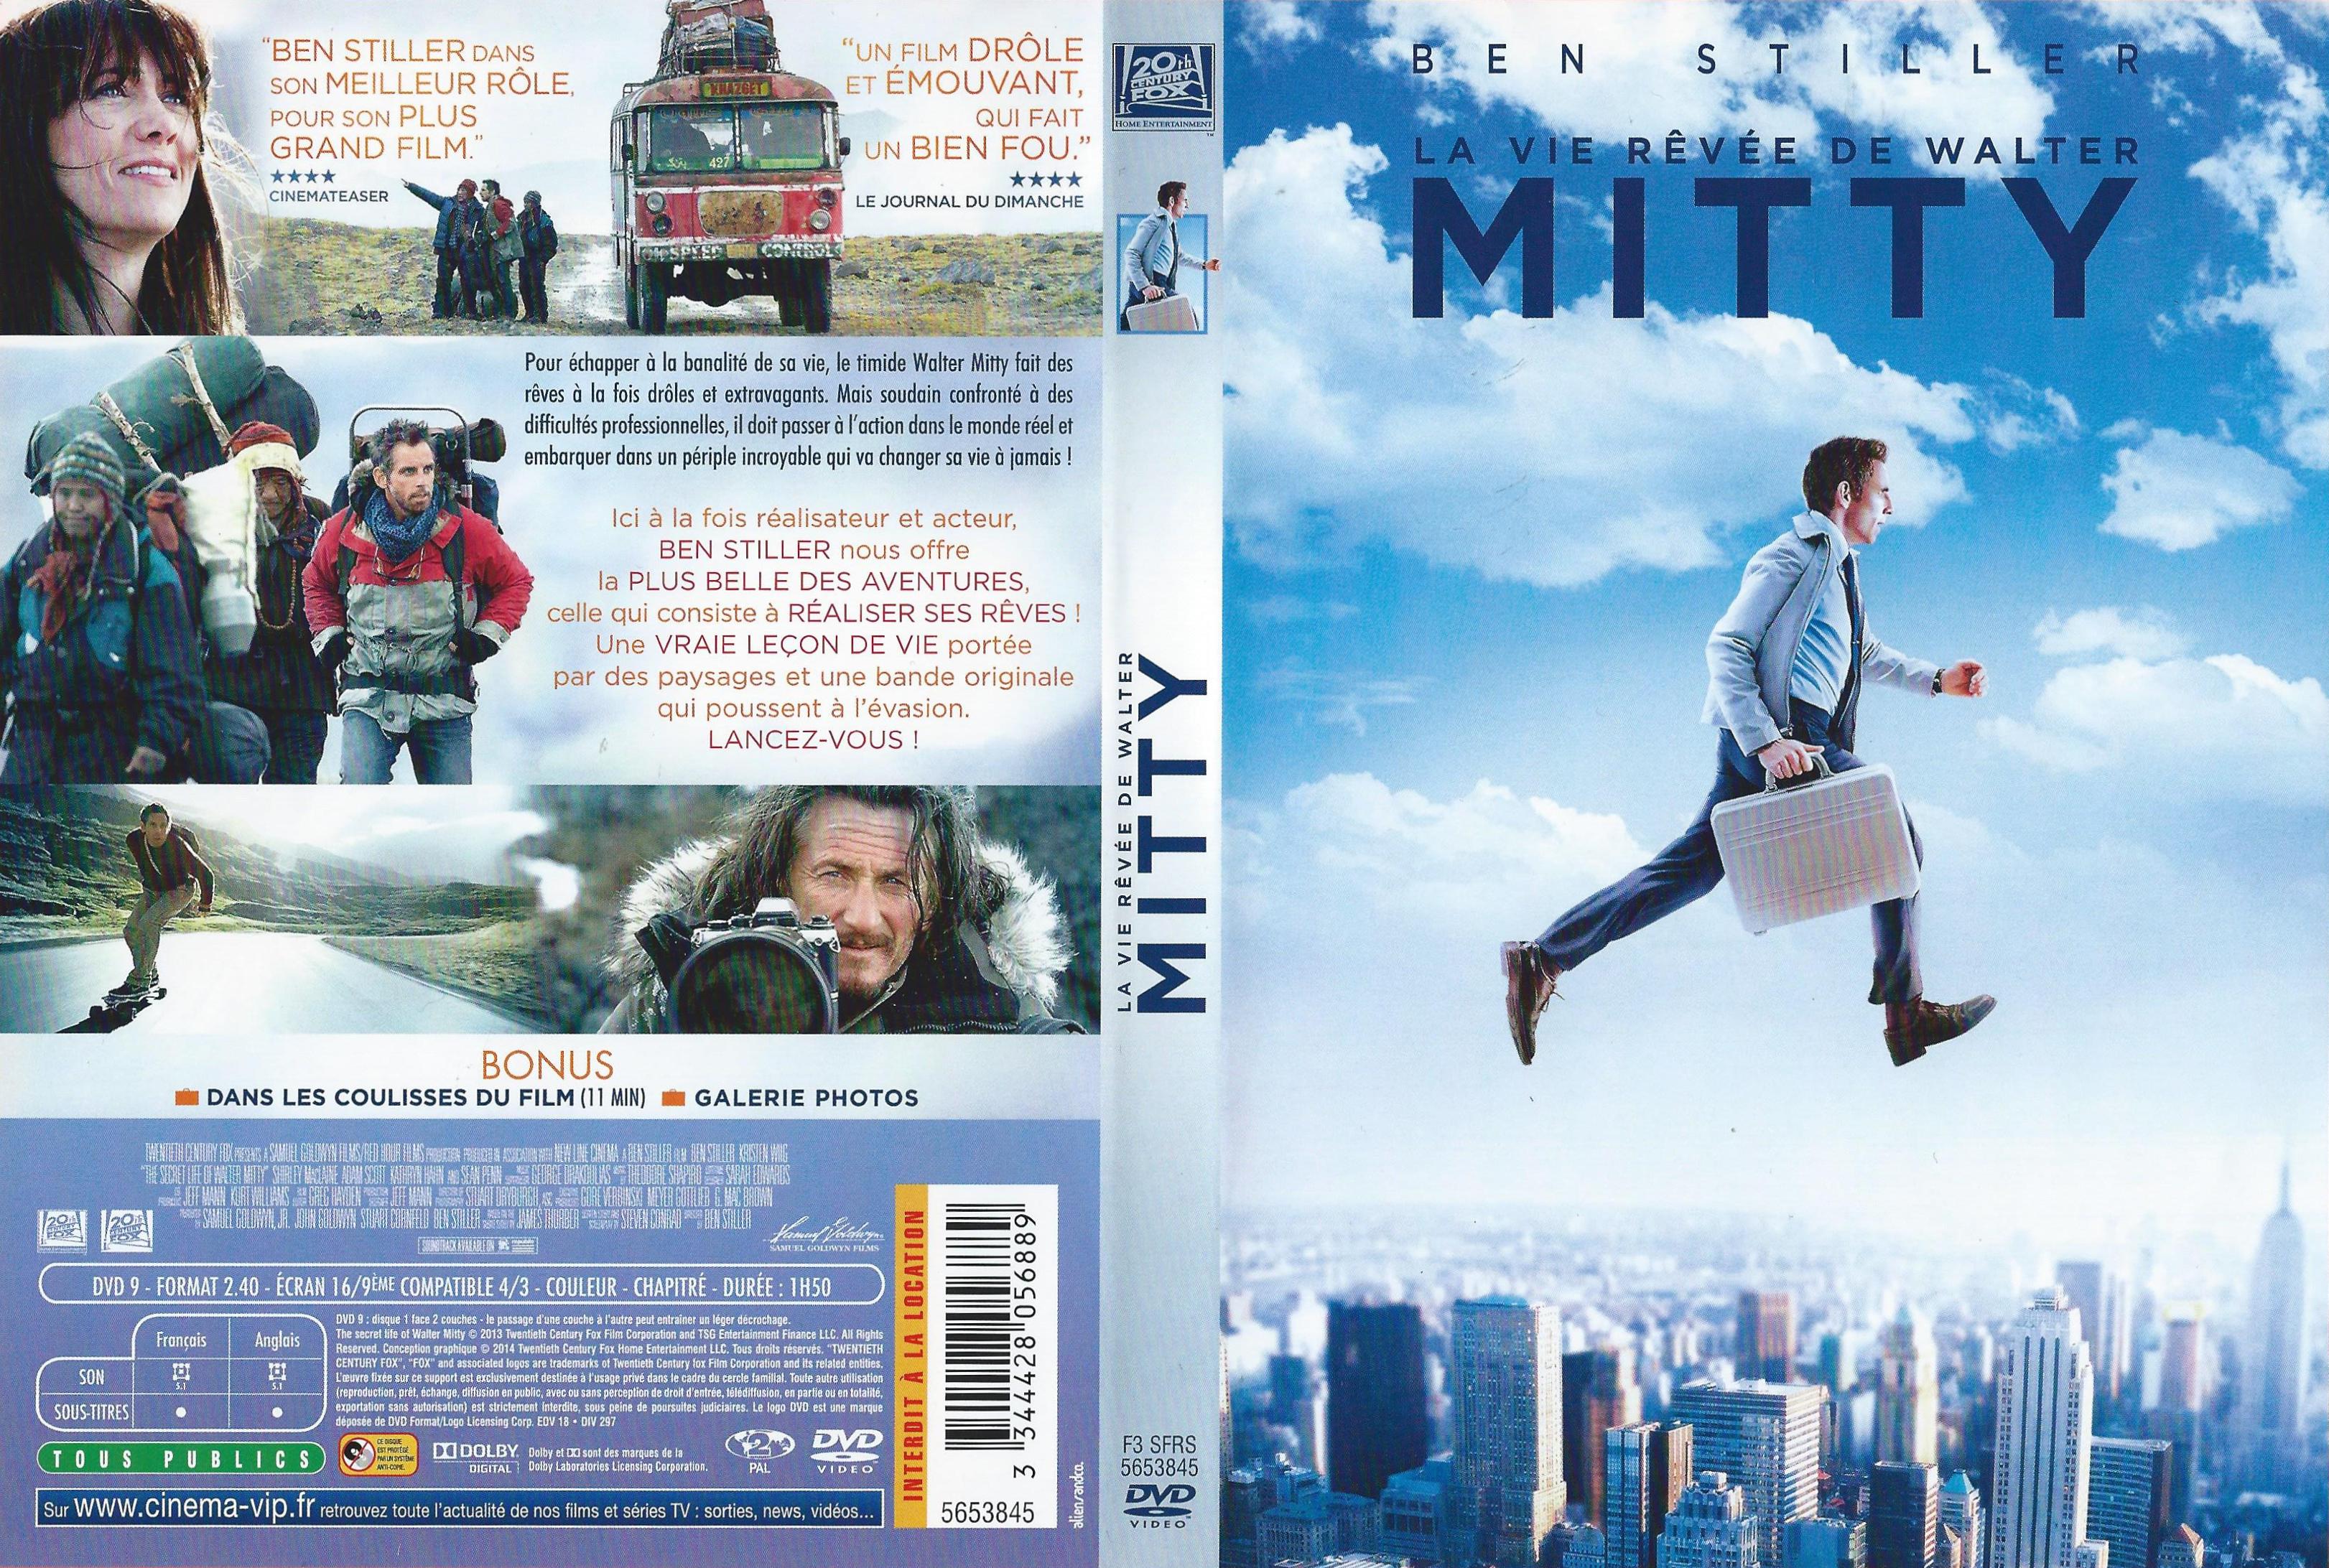 Jaquette DVD La Vie reve de Walter Mitty v2